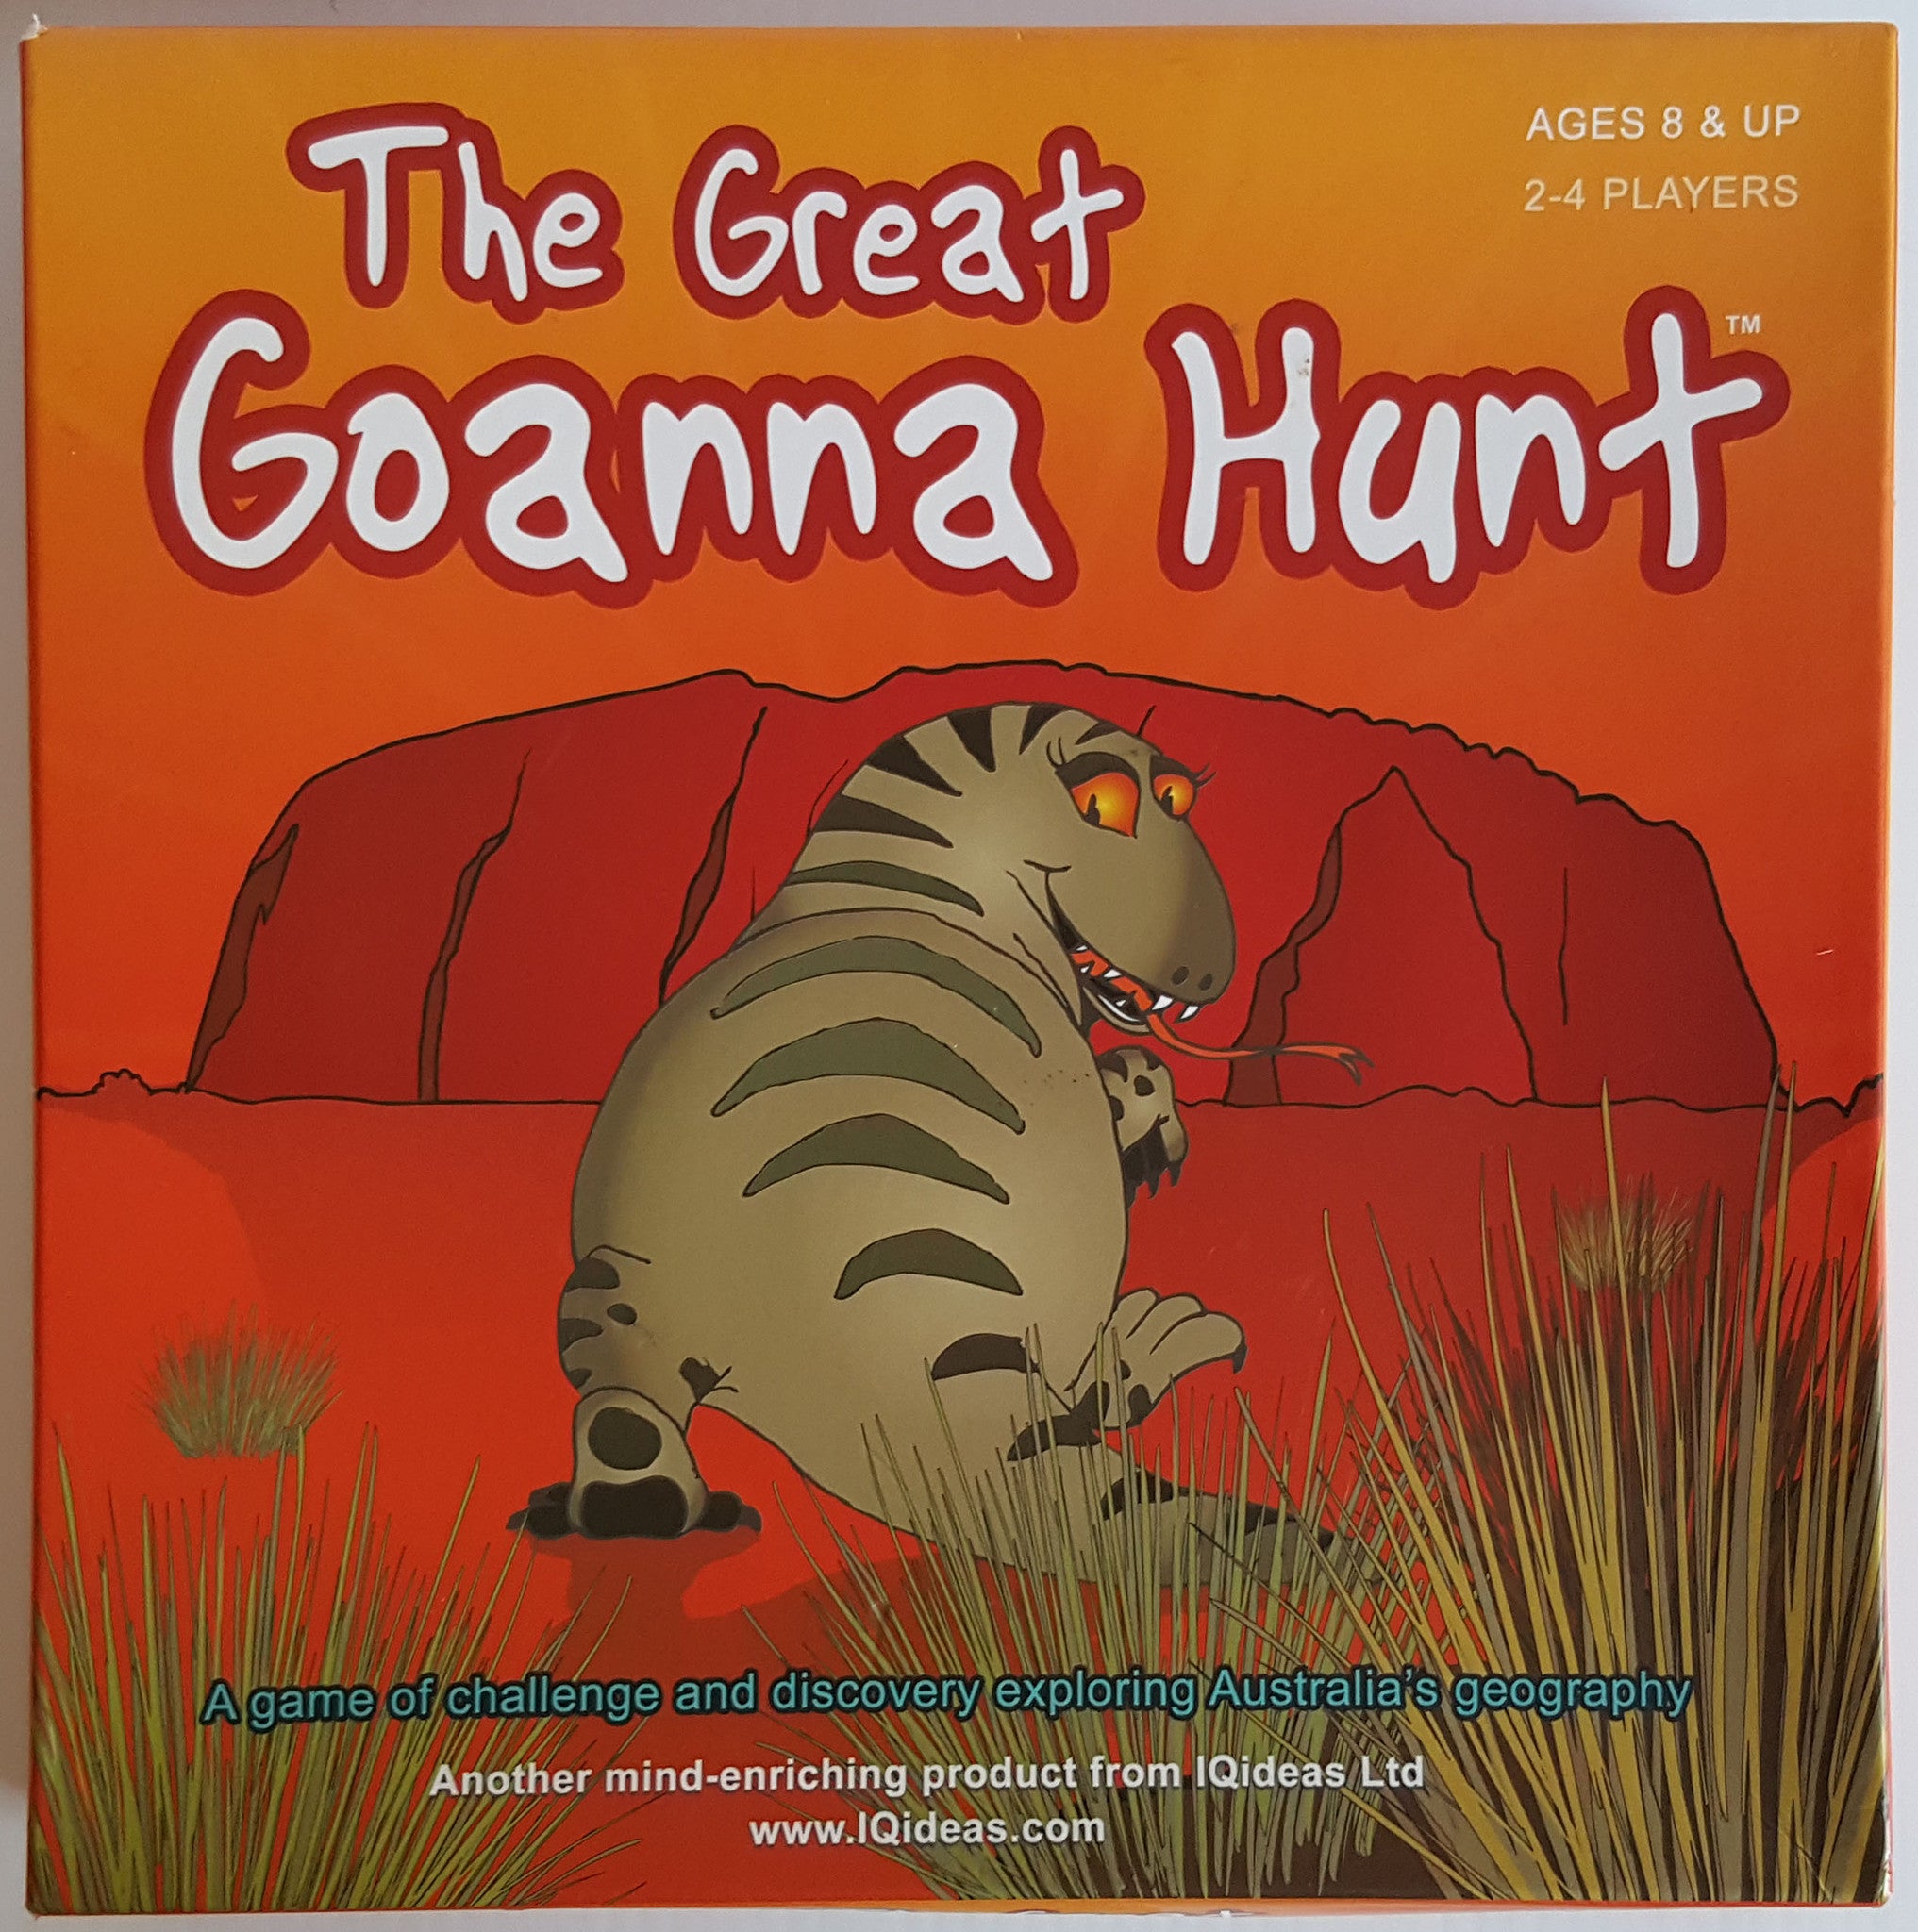 The Great Goanna Hunt